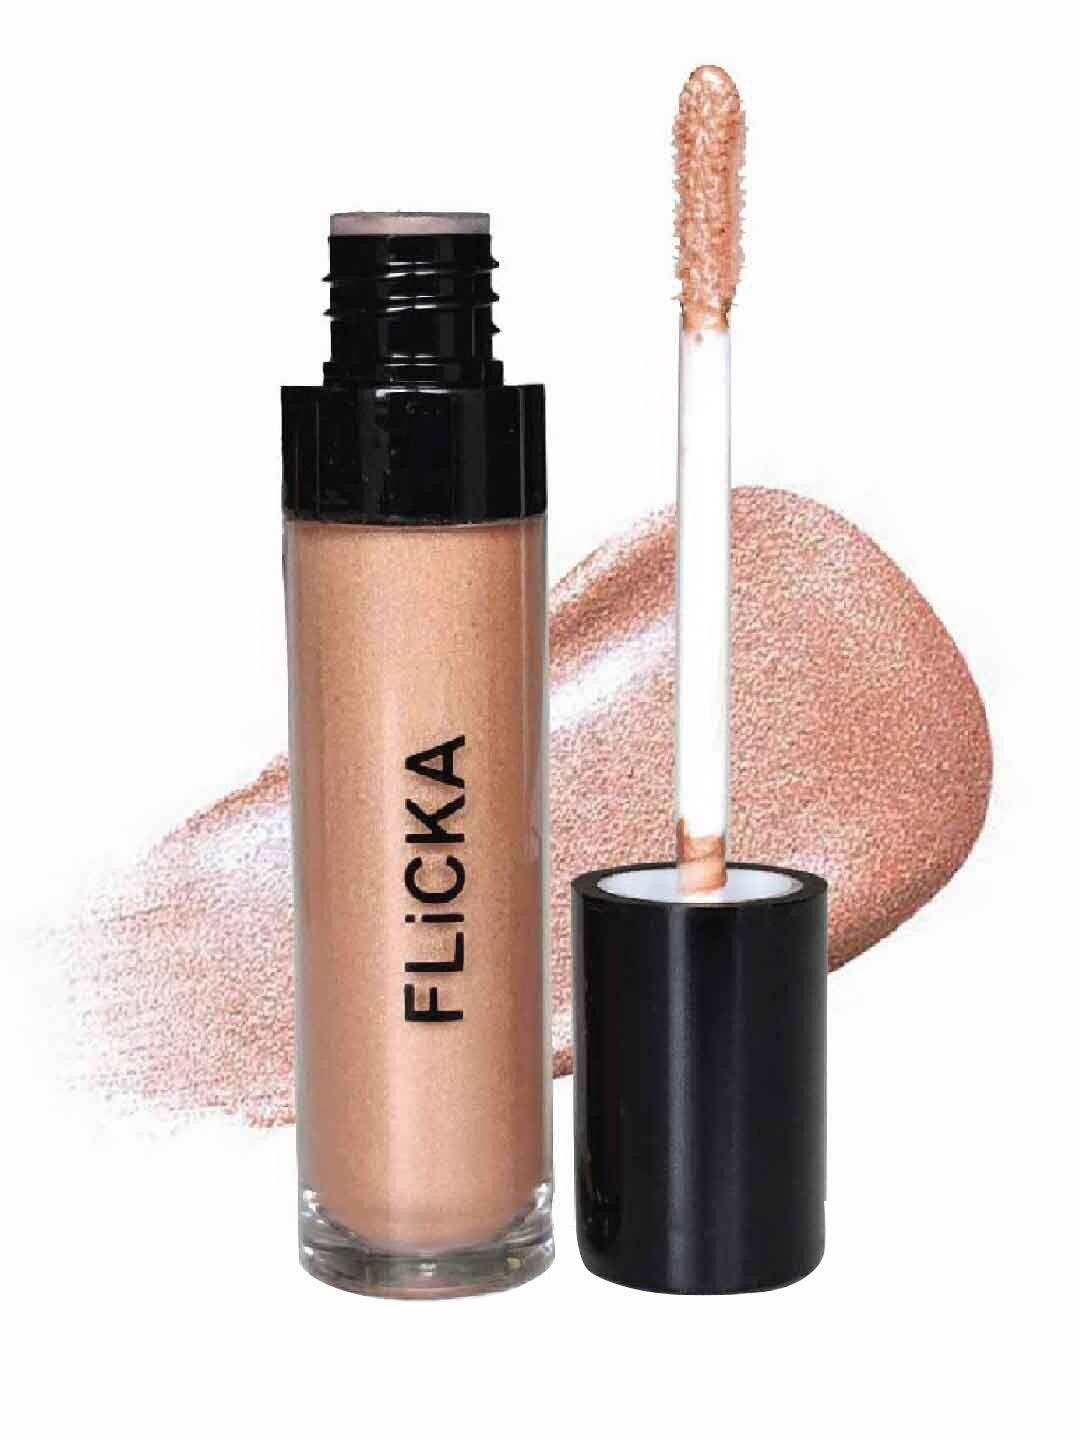 flicka high on shine waterproof liquid highlighter 9ml - copper